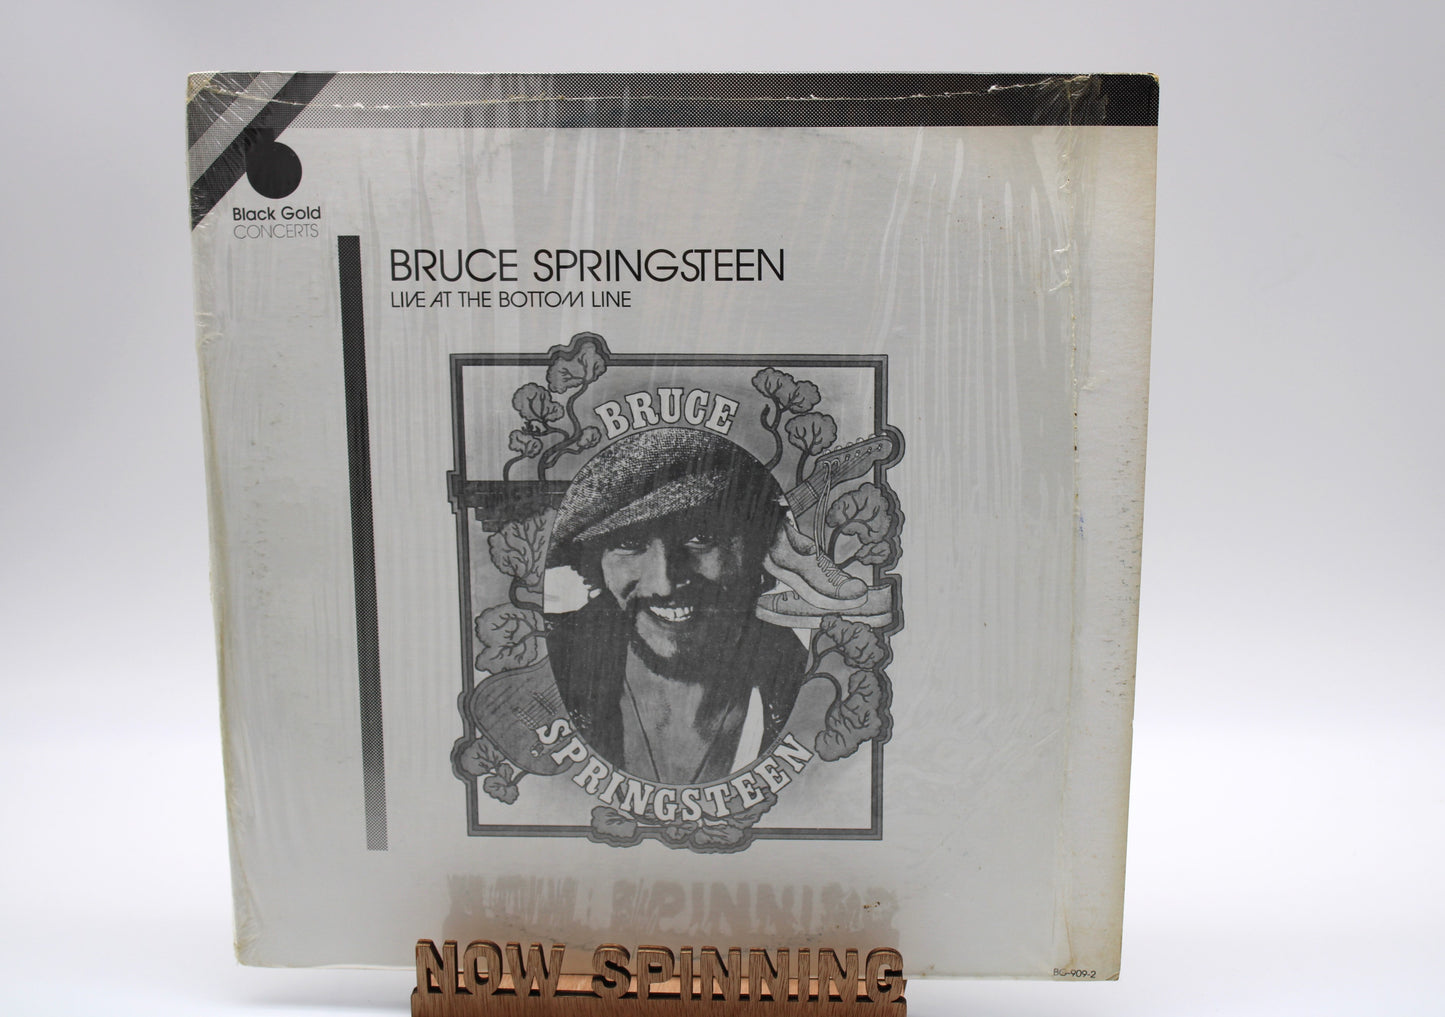 Bruce Springsteen - Unofficial Live at the Bottom Line - 2 LPs Excellent Vinyl- Black Gold Label